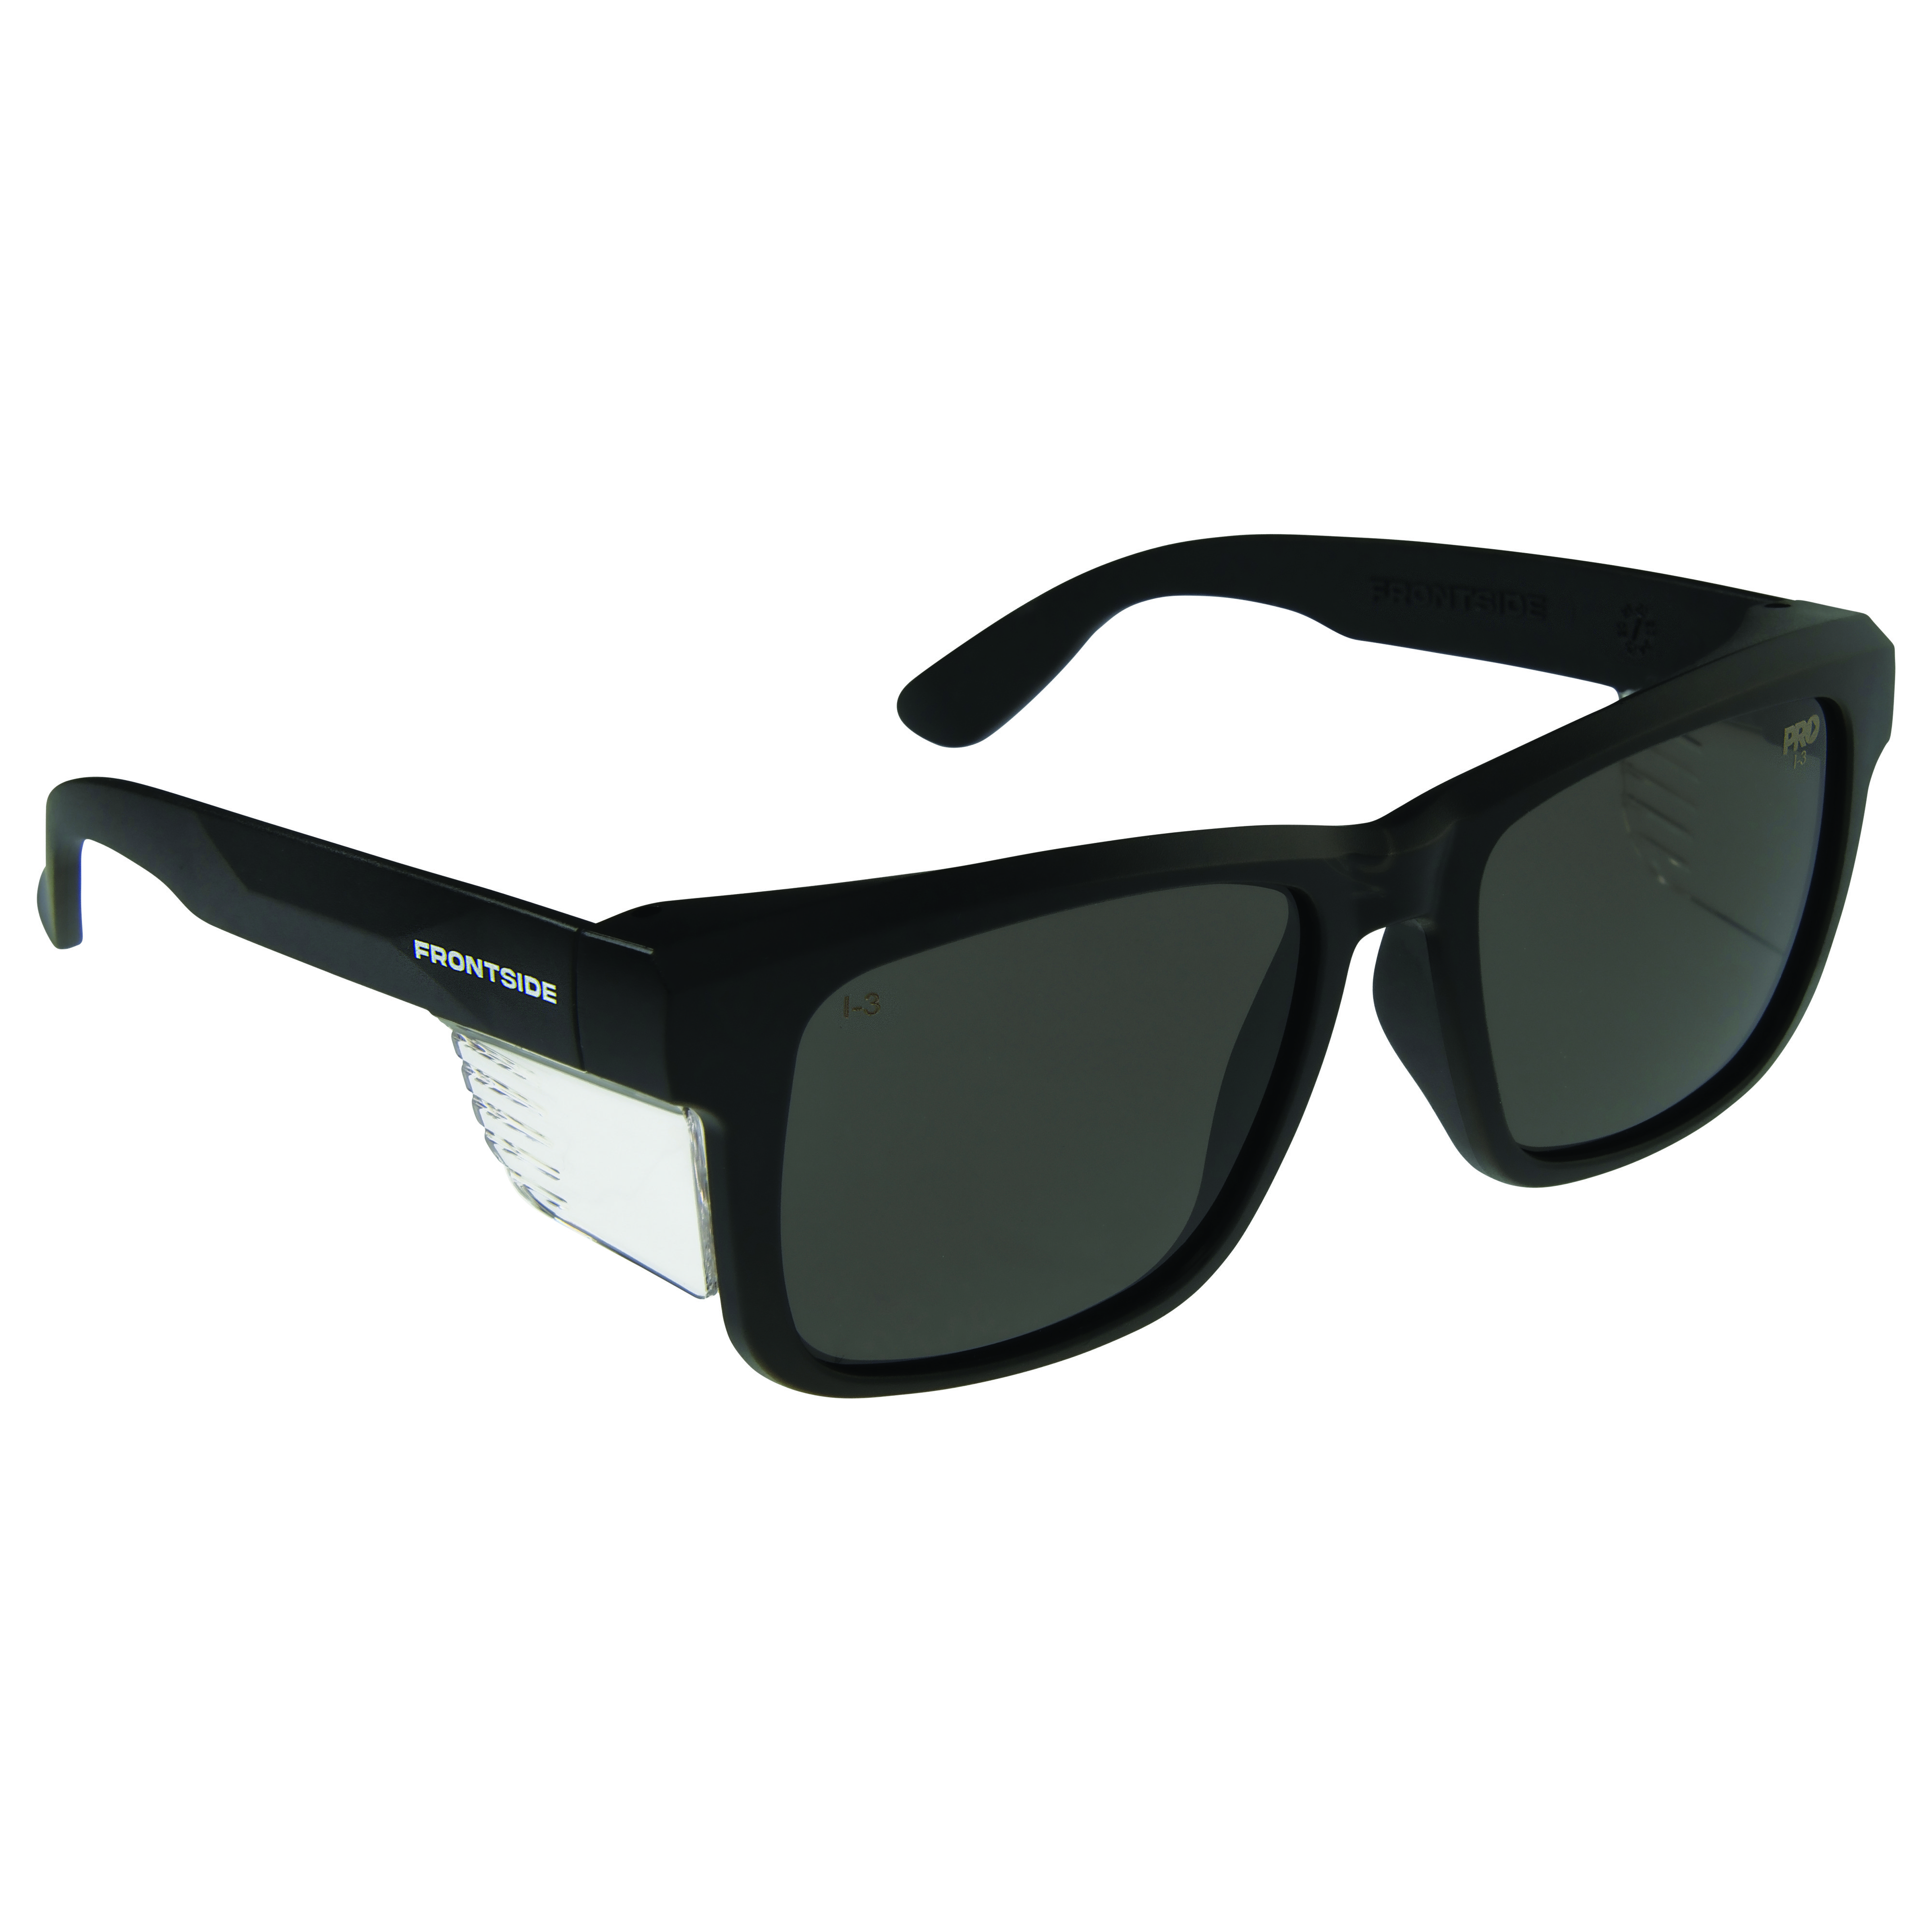 PRO CHOICE 6502BK - Frontside Safety Glasses Smoke Lens with Black Frame